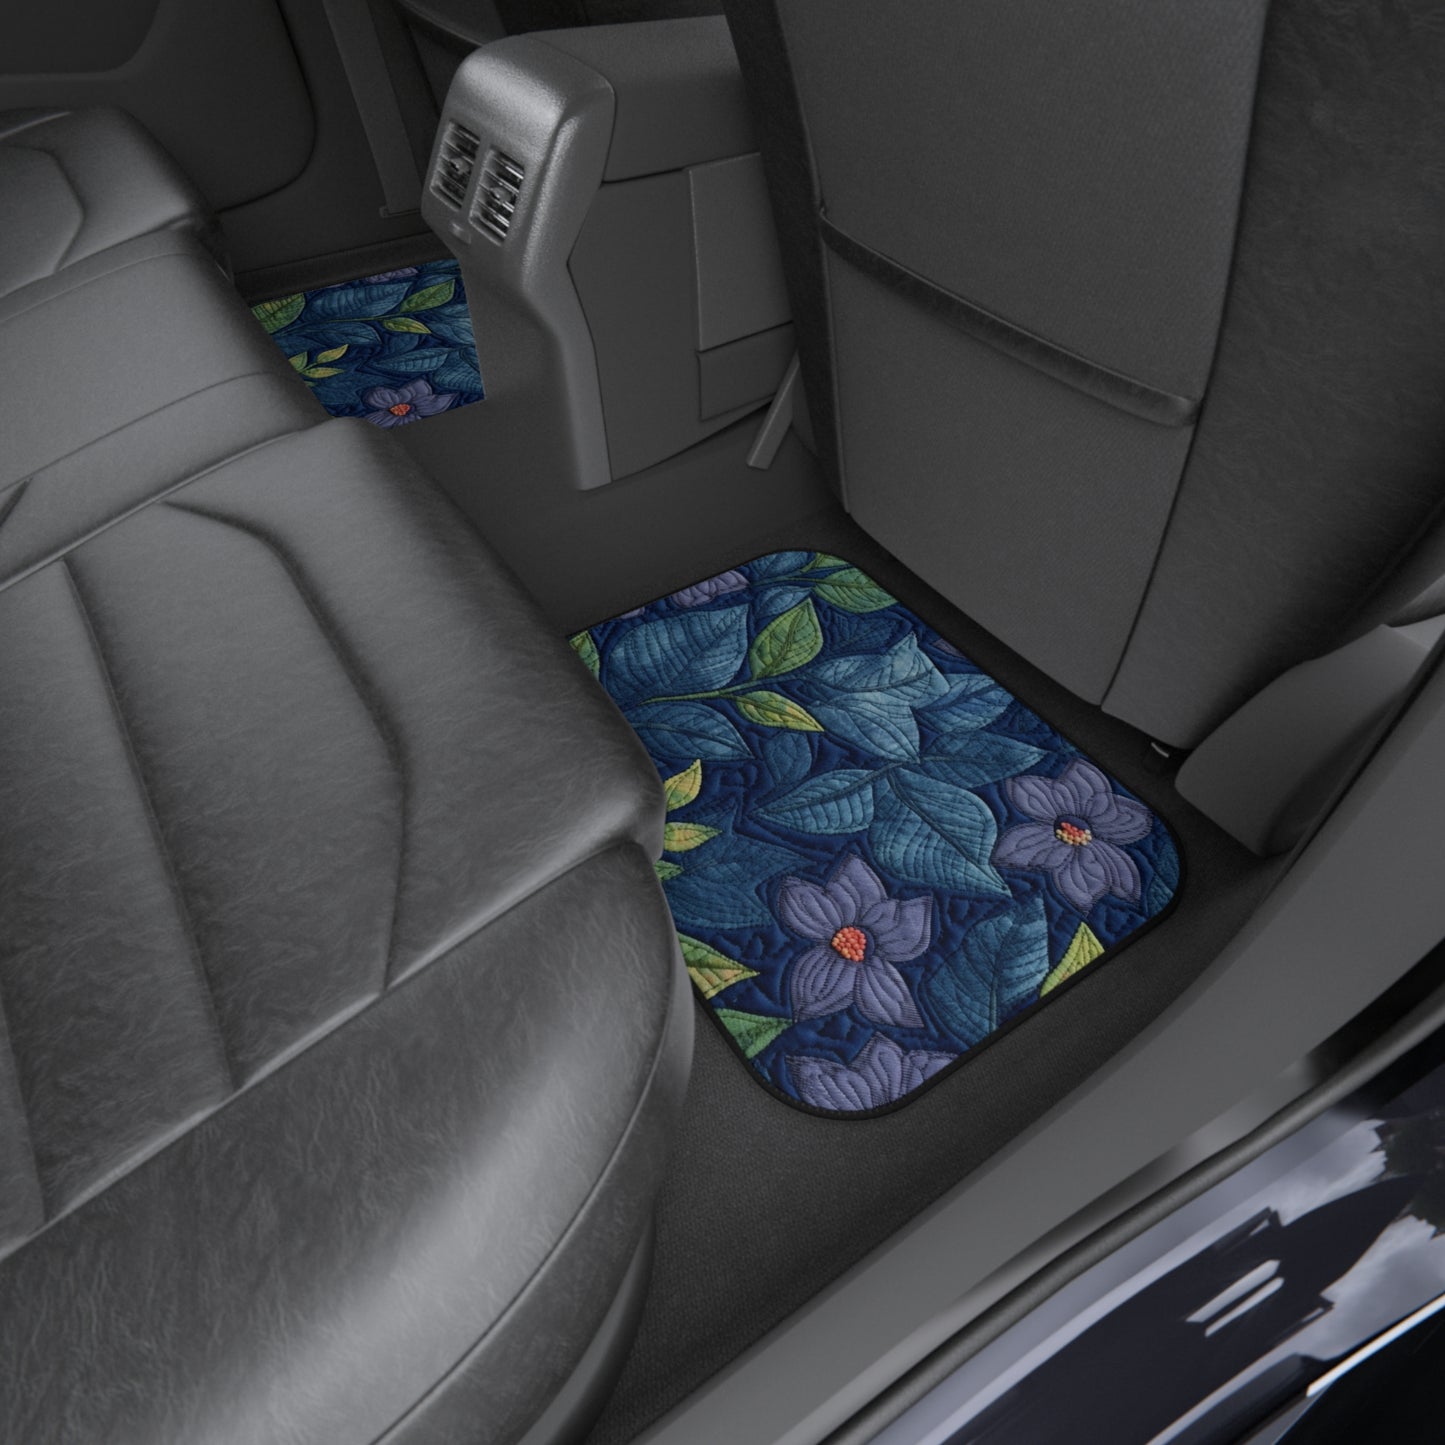 Floral Embroidery Blue: Denim-Inspired, Artisan-Crafted Flower Design - Car Mats (Set of 4)